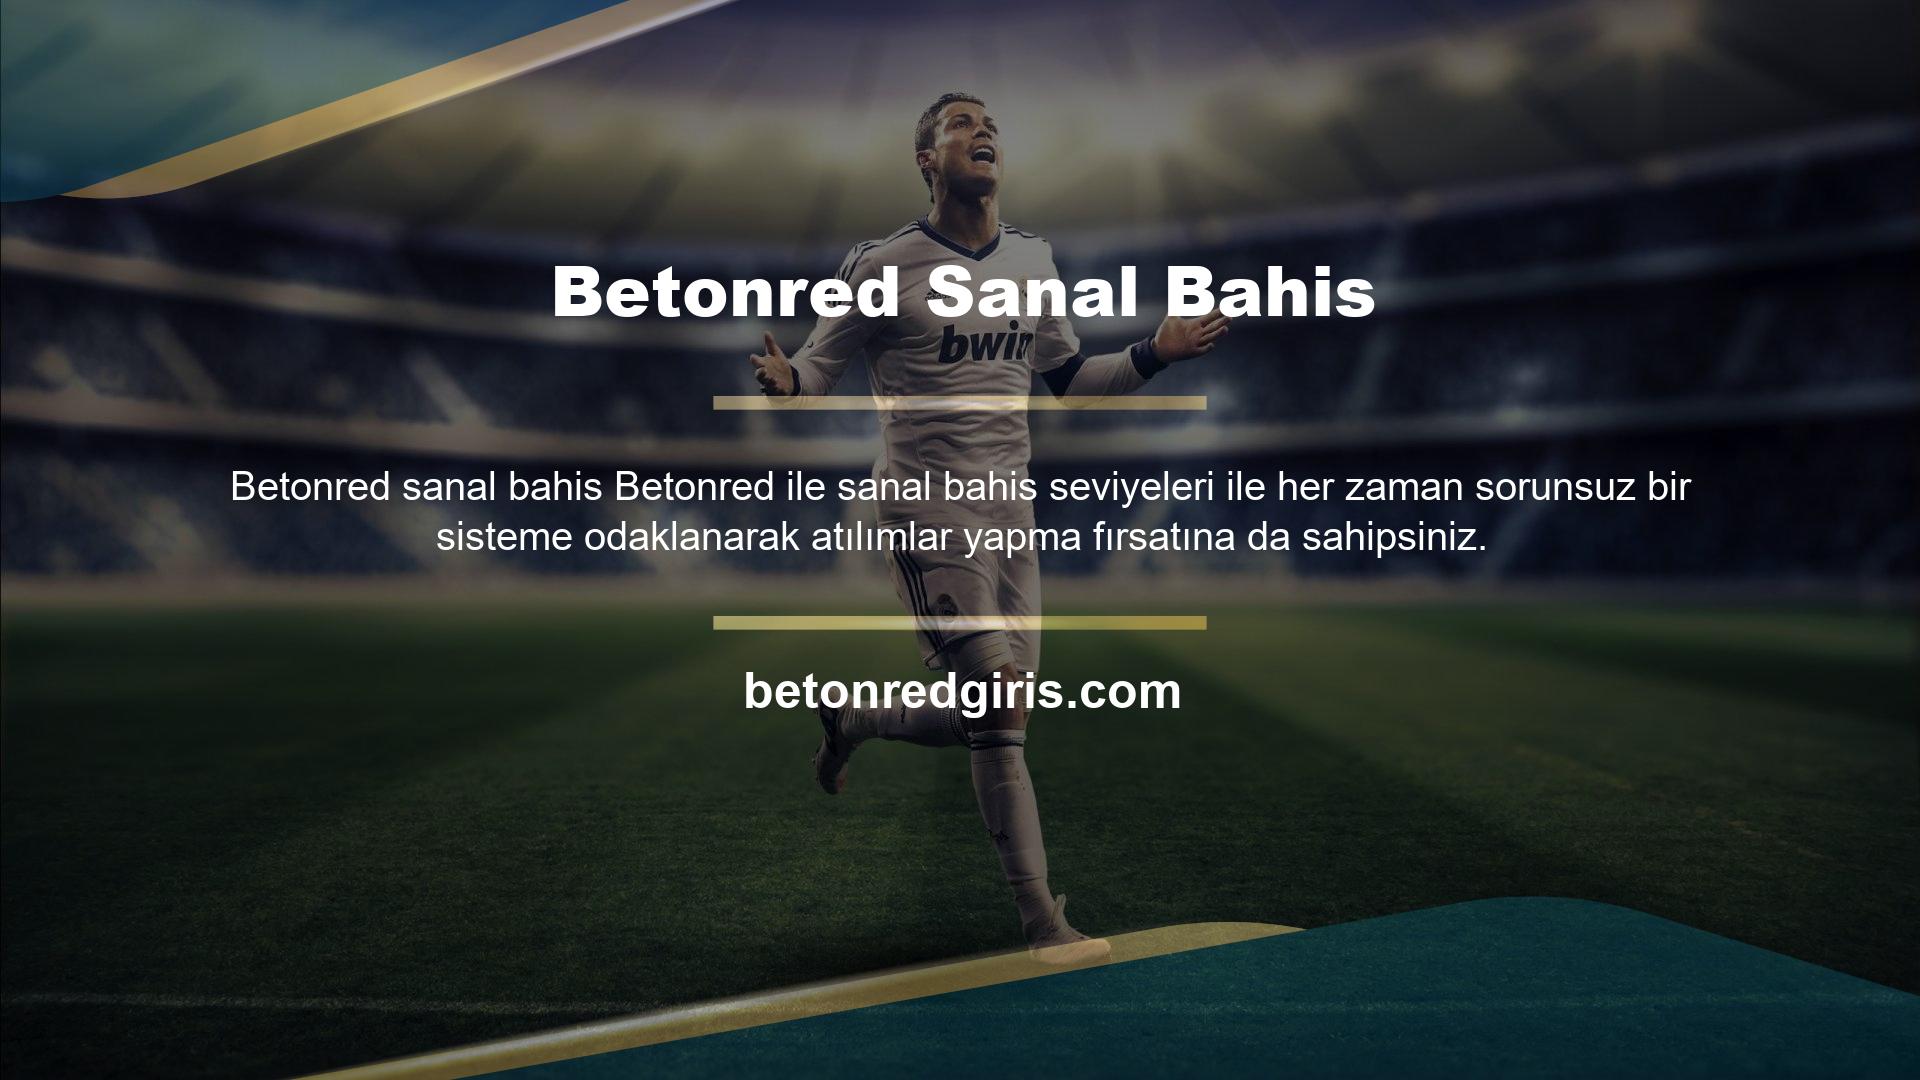 Betonred Sanal Bahis